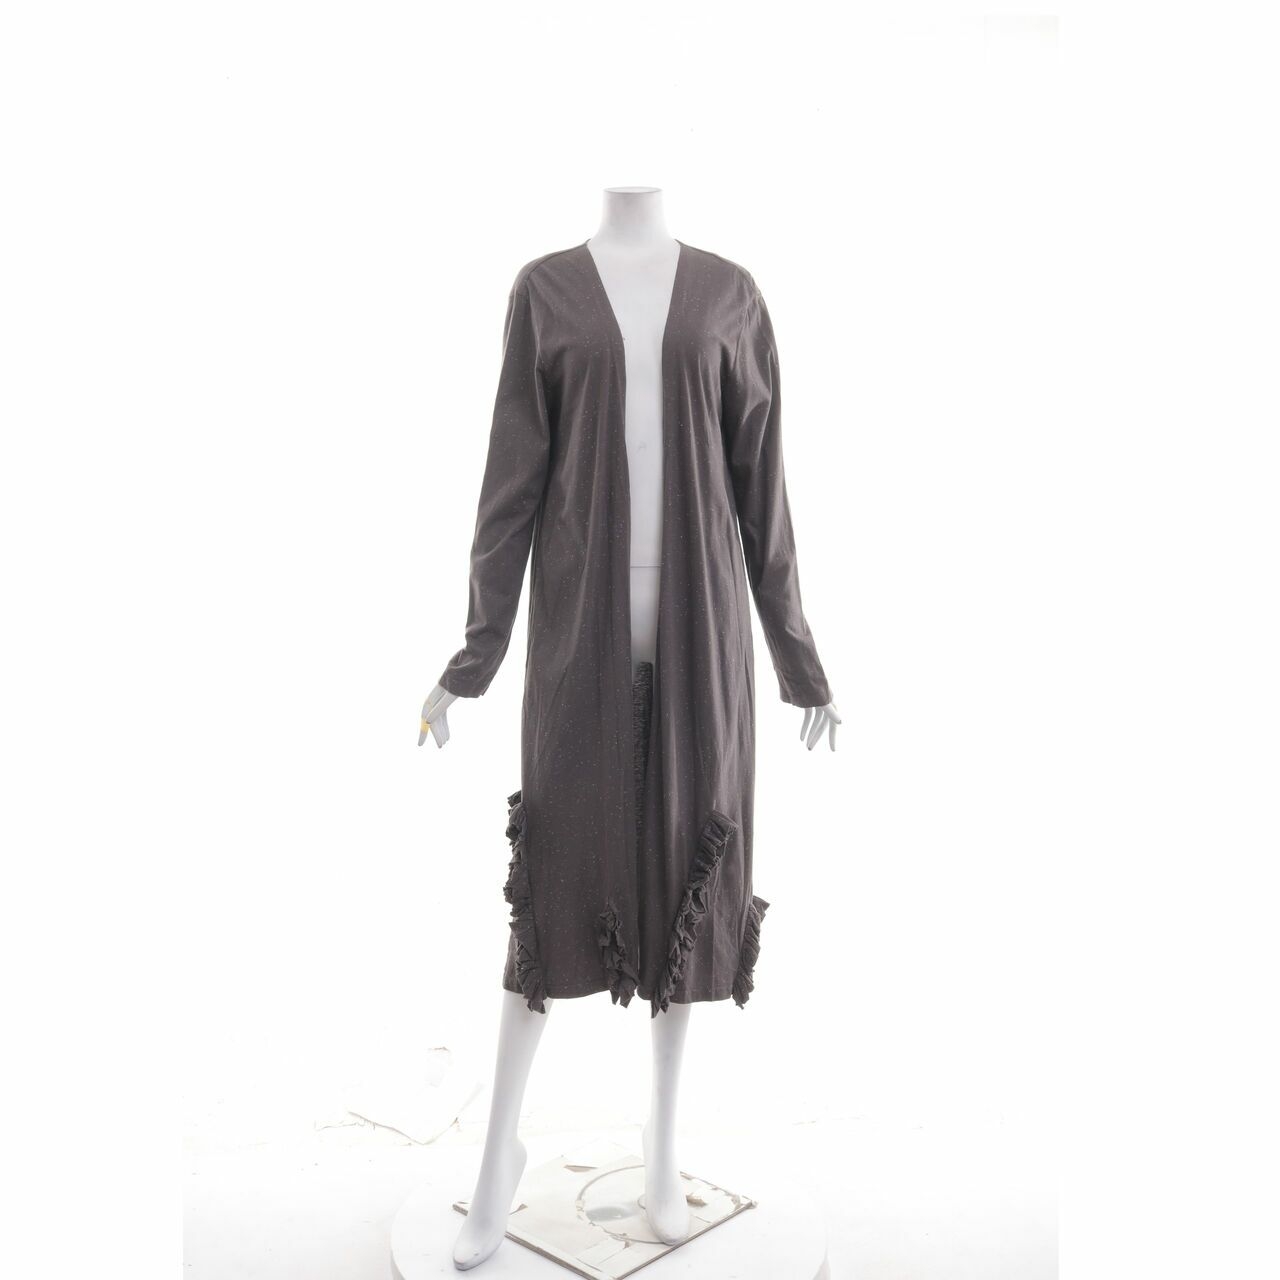 Rashawl by Renni Andriani Grey Kimono Outerwear